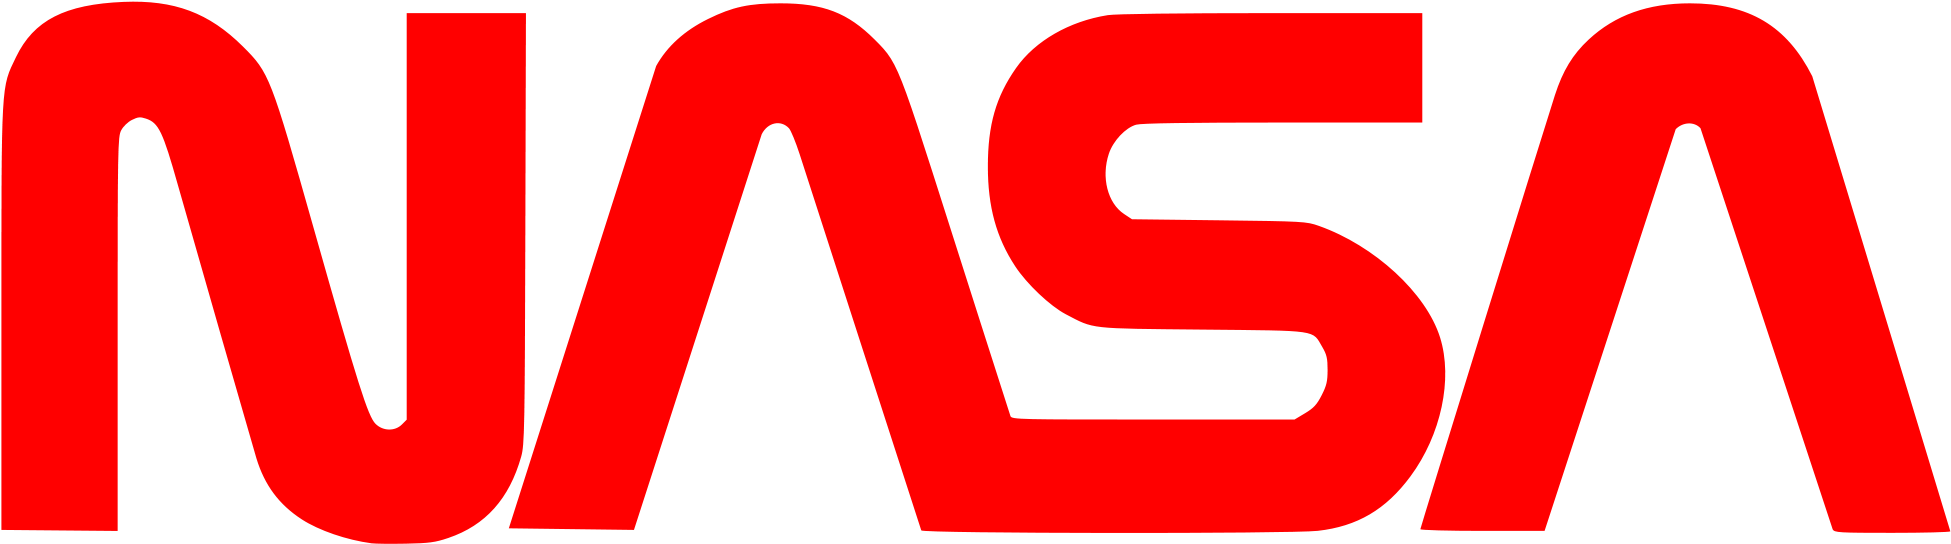 Image Of Nasa Symbol Clip Art Medium Size - Nasa Logo High Resolution (2000x594)